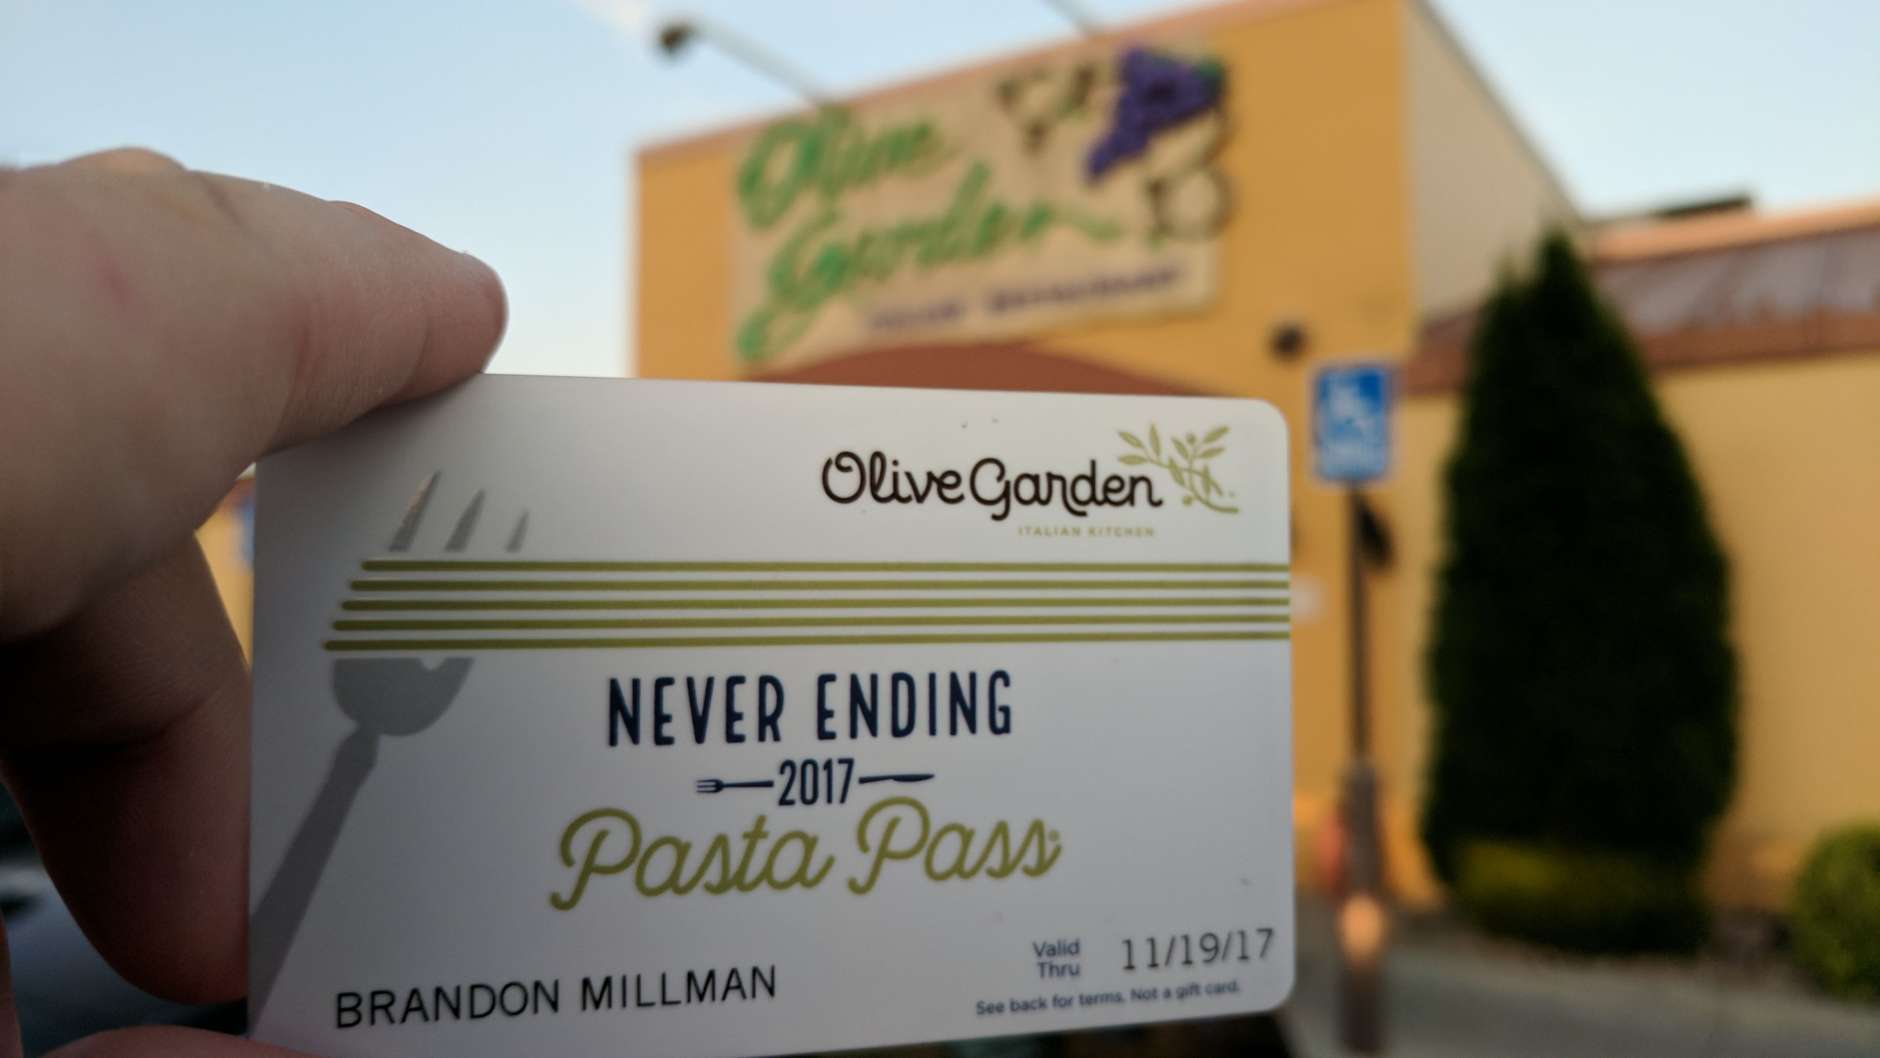 The Columbus, Ohio, Olive Garden. (WTOP/Brandon Millman)